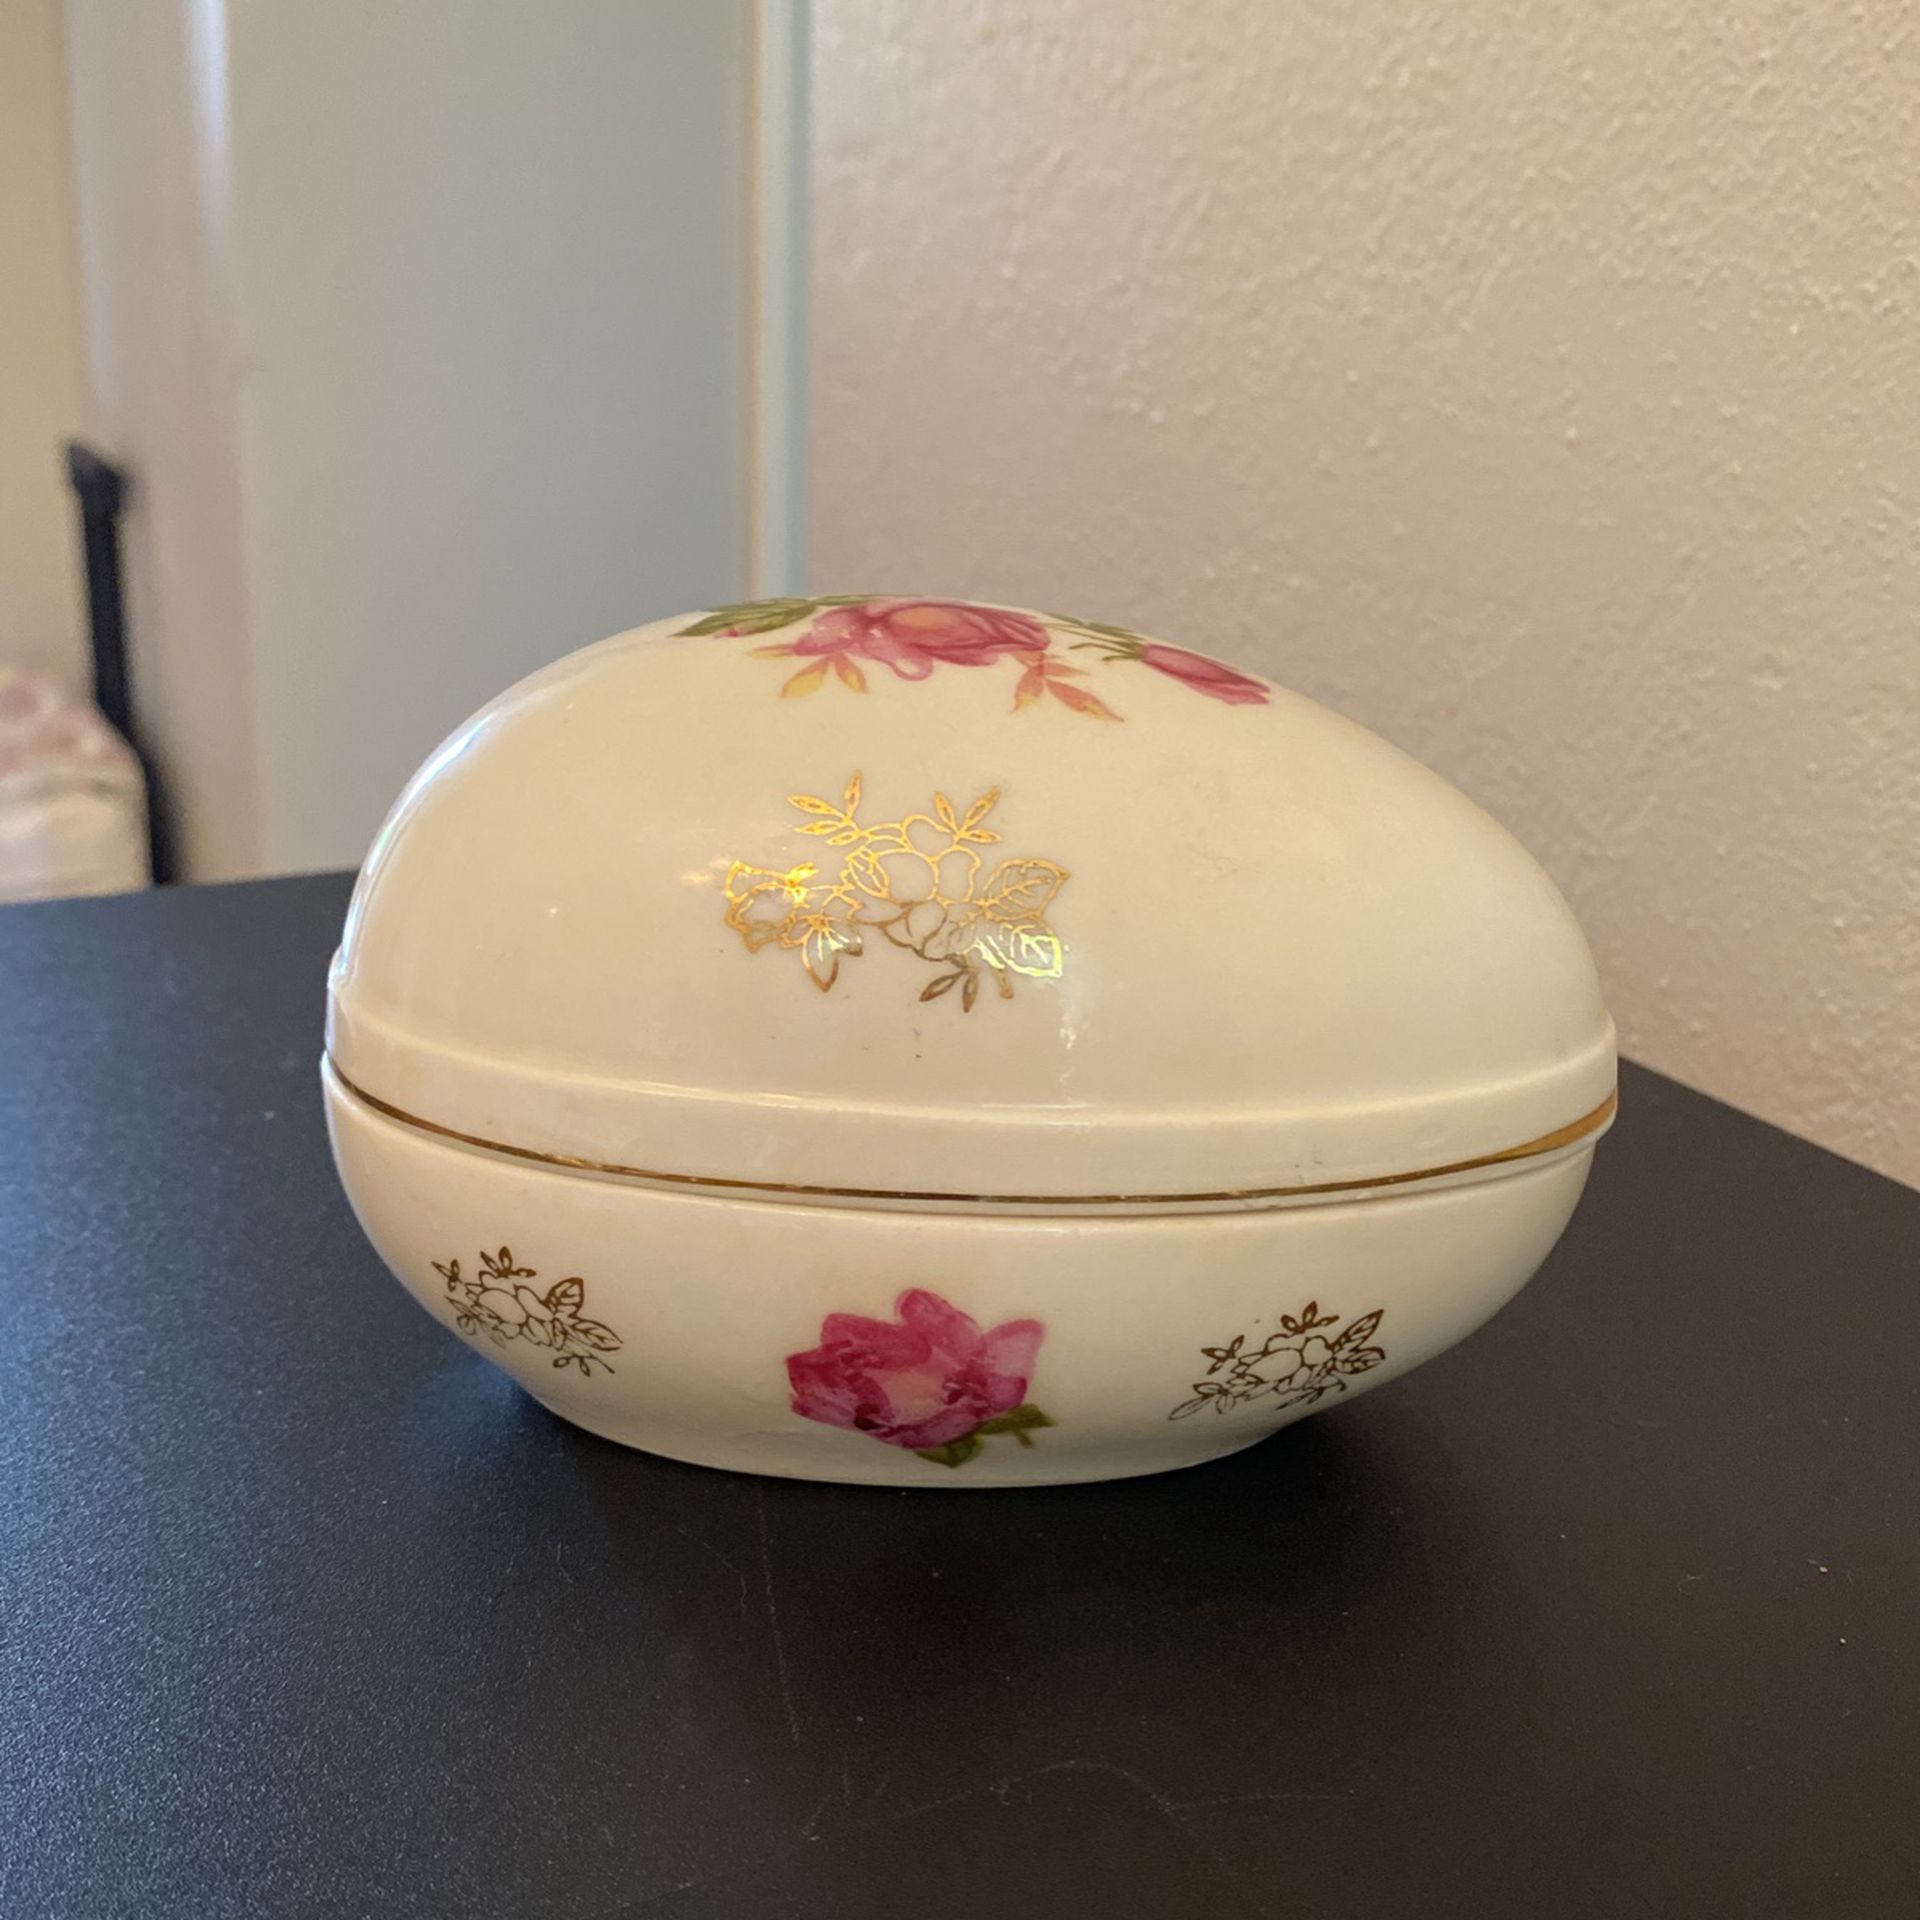 Vintage Lefton china hand painted rose egg shaped trinket box.